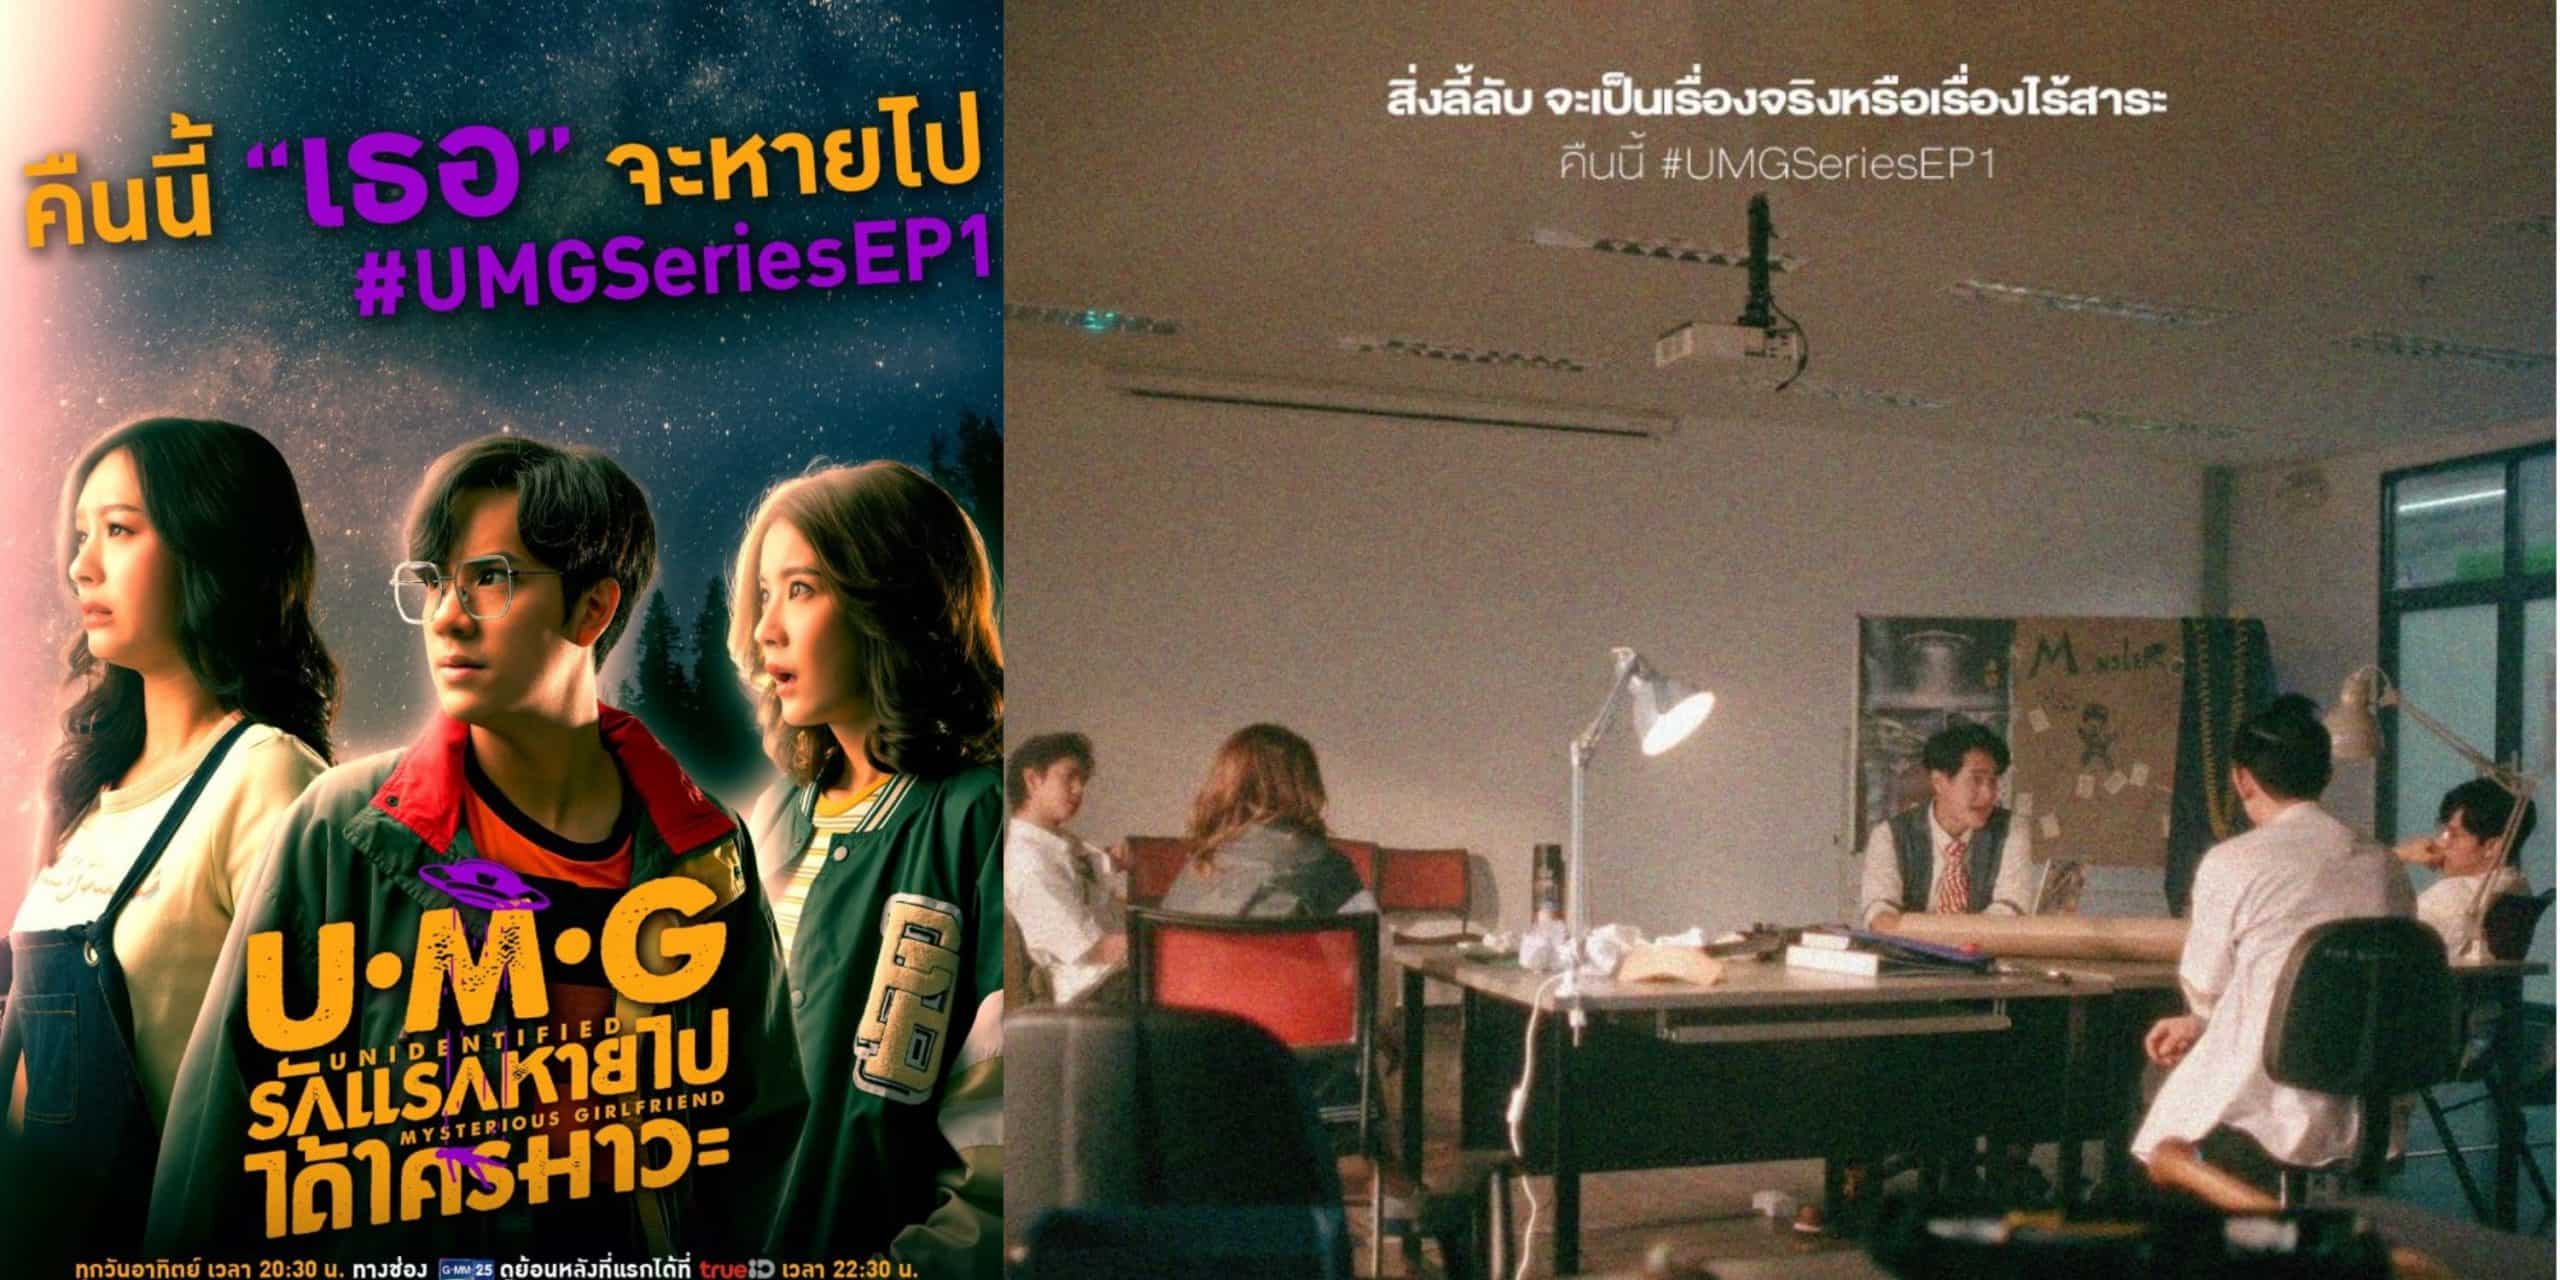 UMG Thai Fantasy Series Episode 2